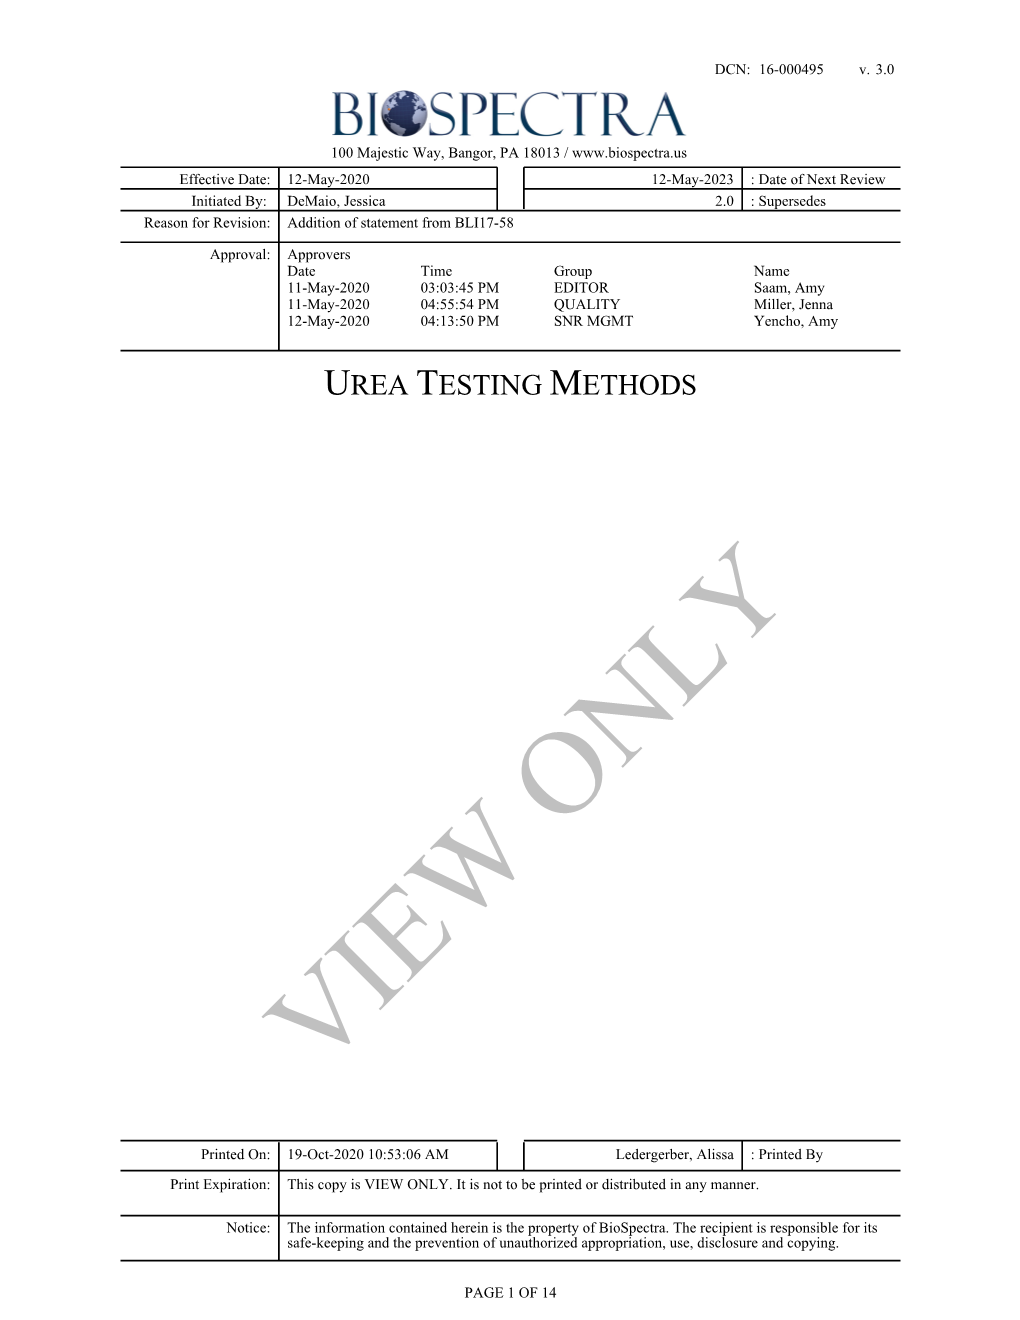 Urea Testing Methods